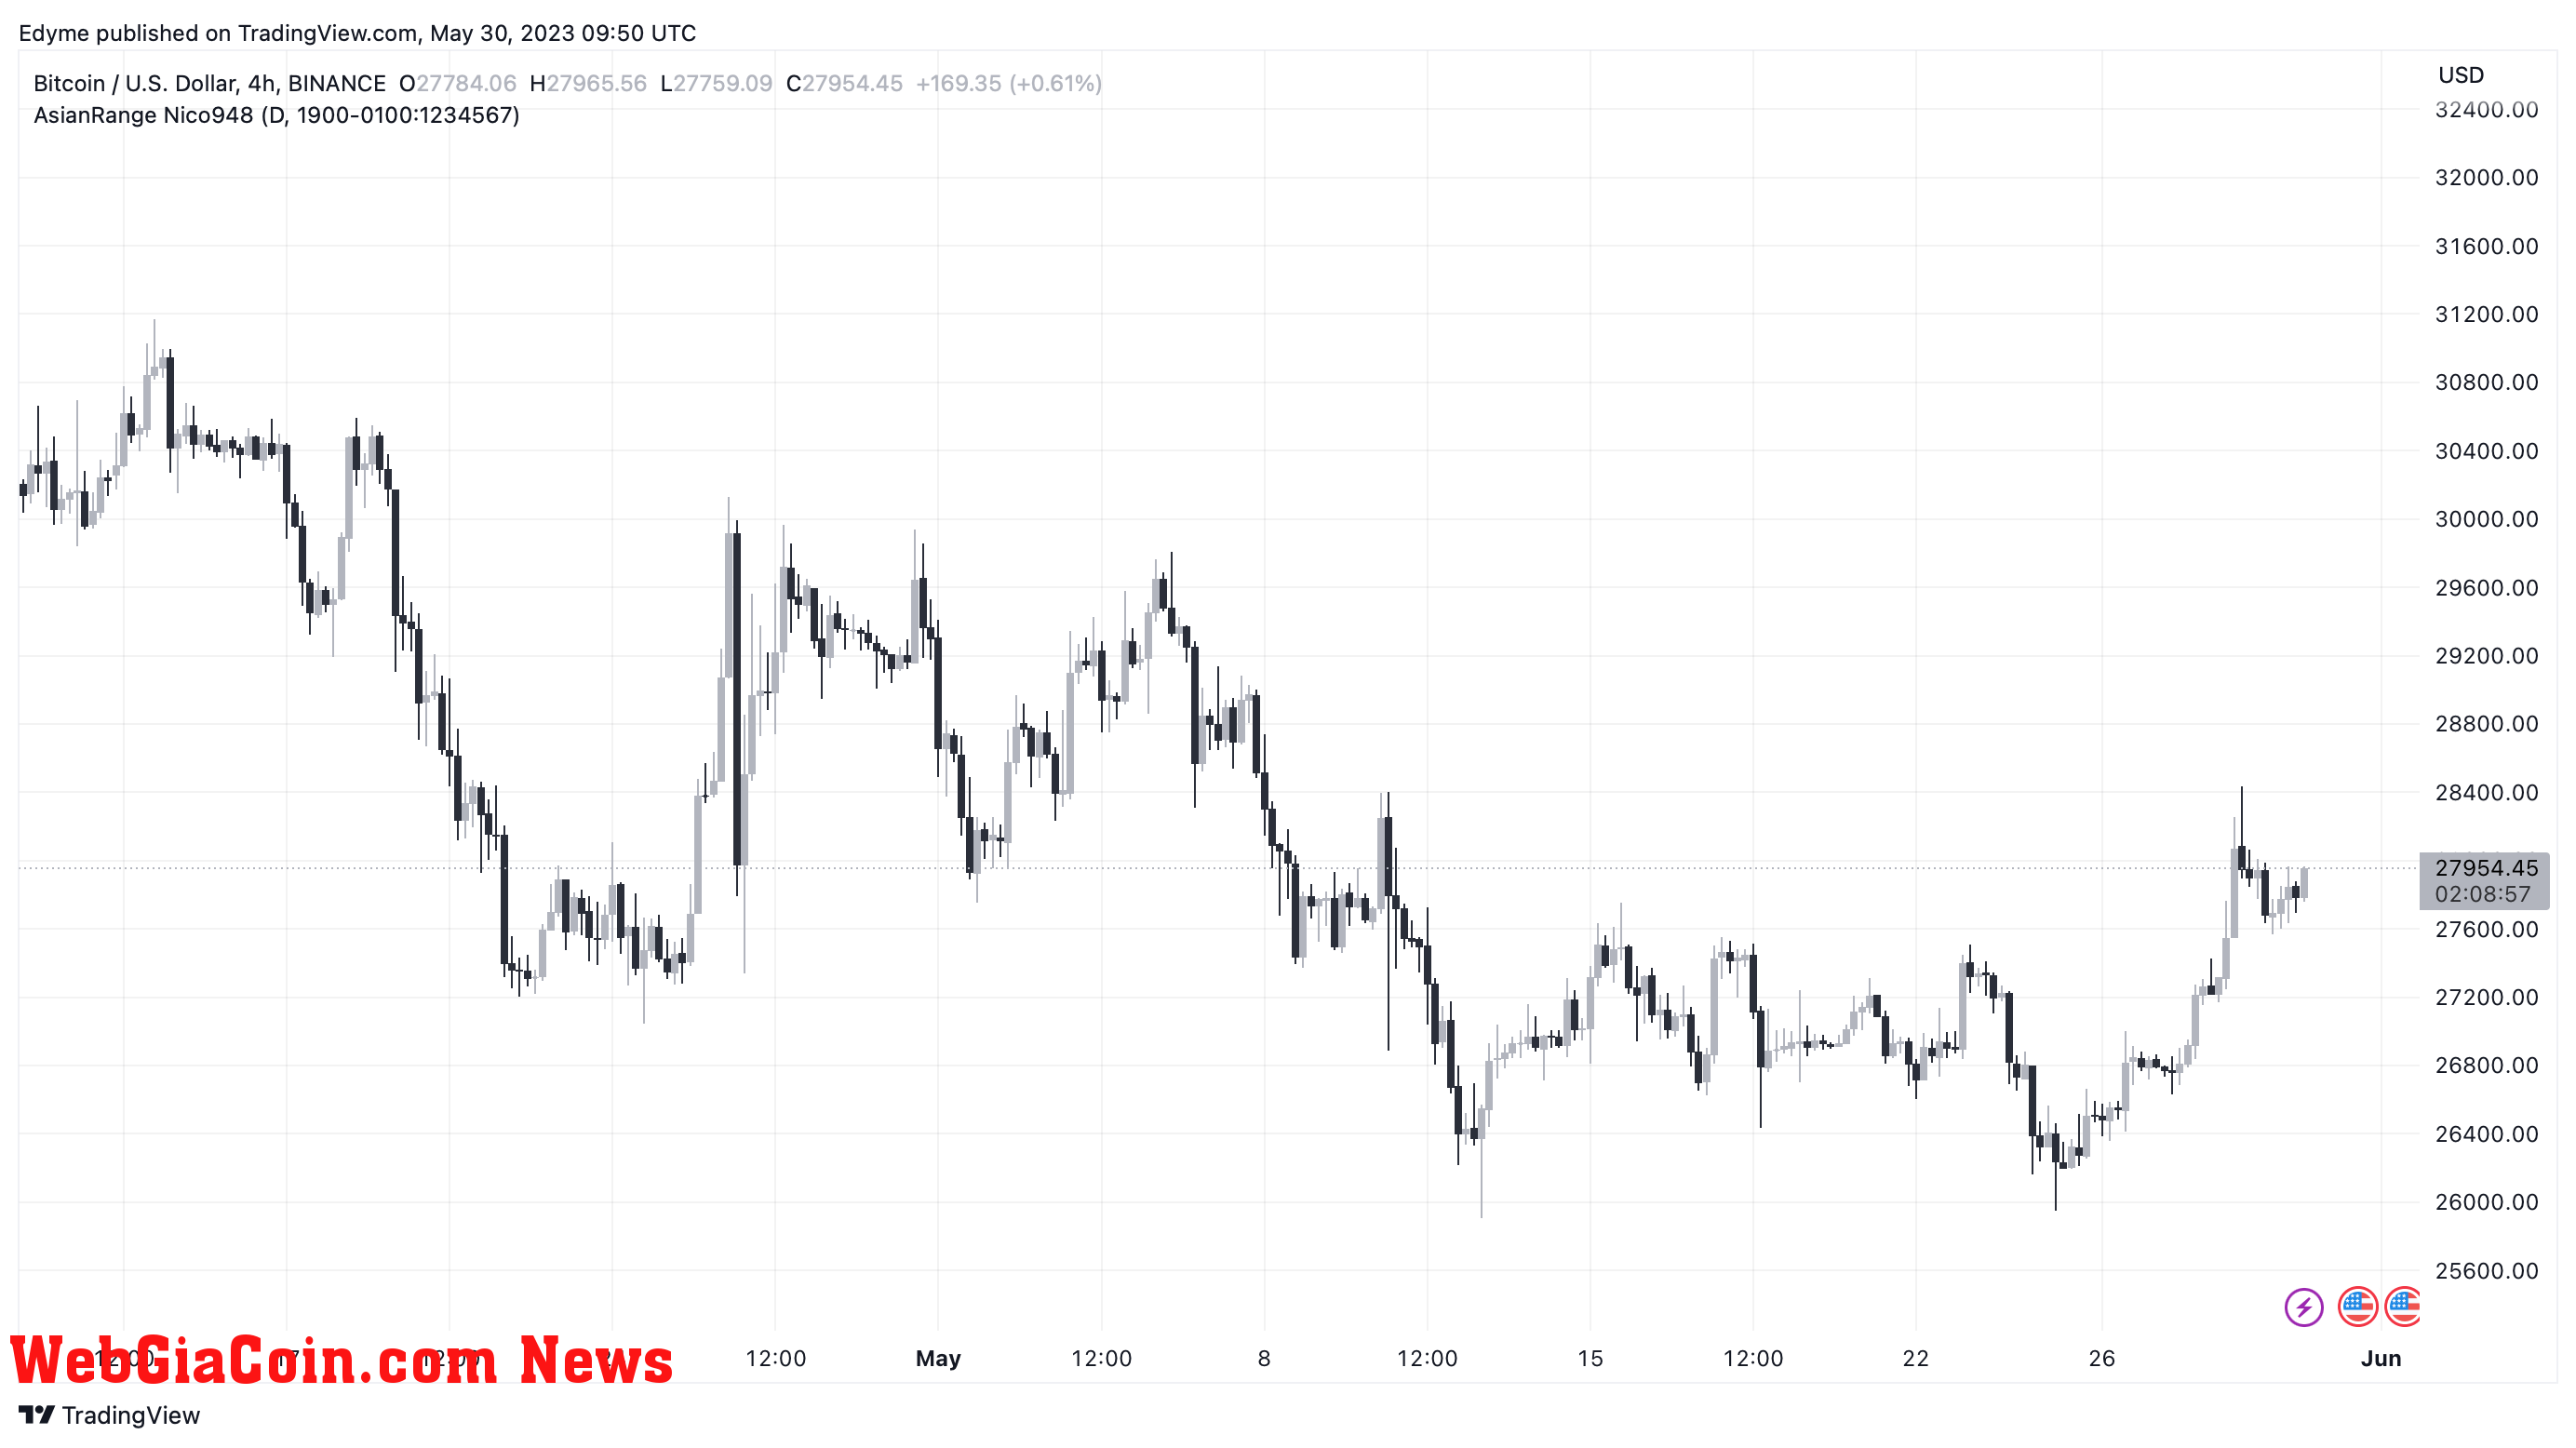 Bitcoin (BTC)’s price chart on TradingView